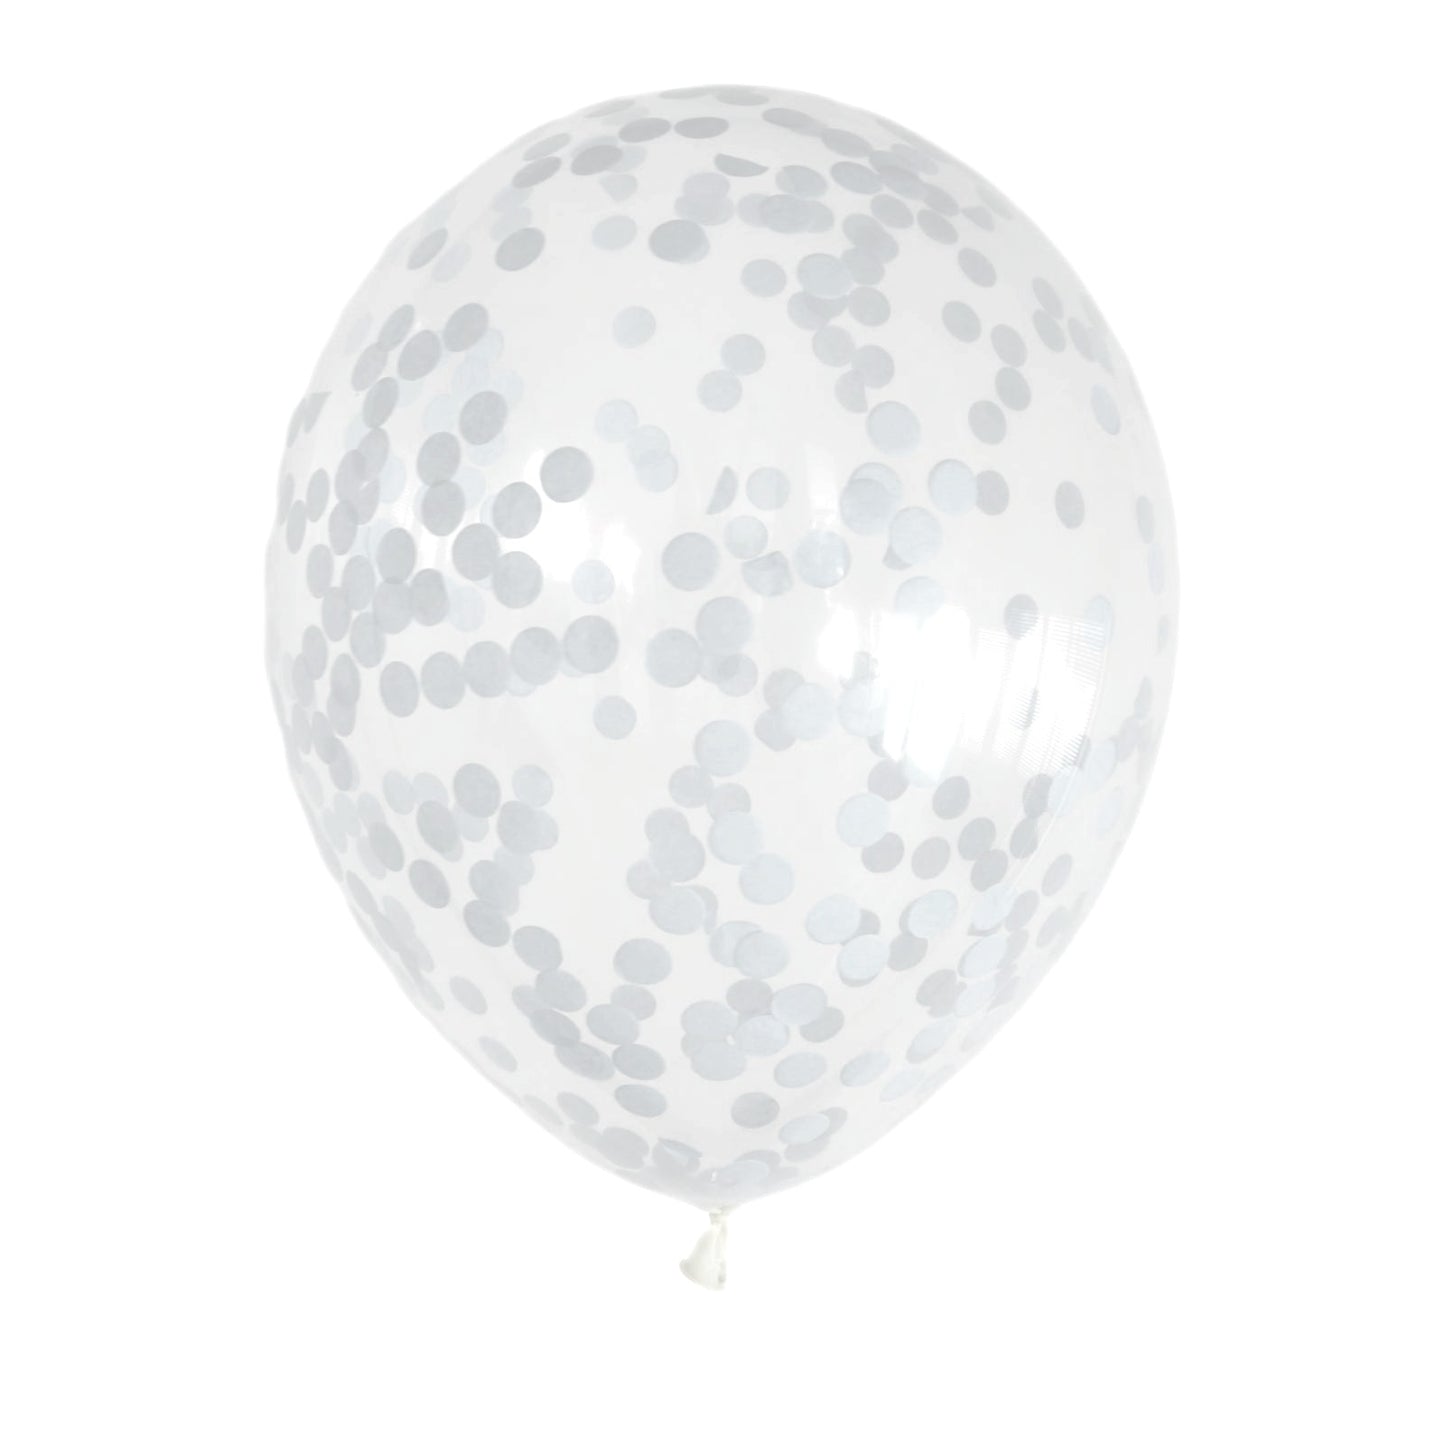 Witte Confetti Ballonnen (10 stuks / 30 CM)